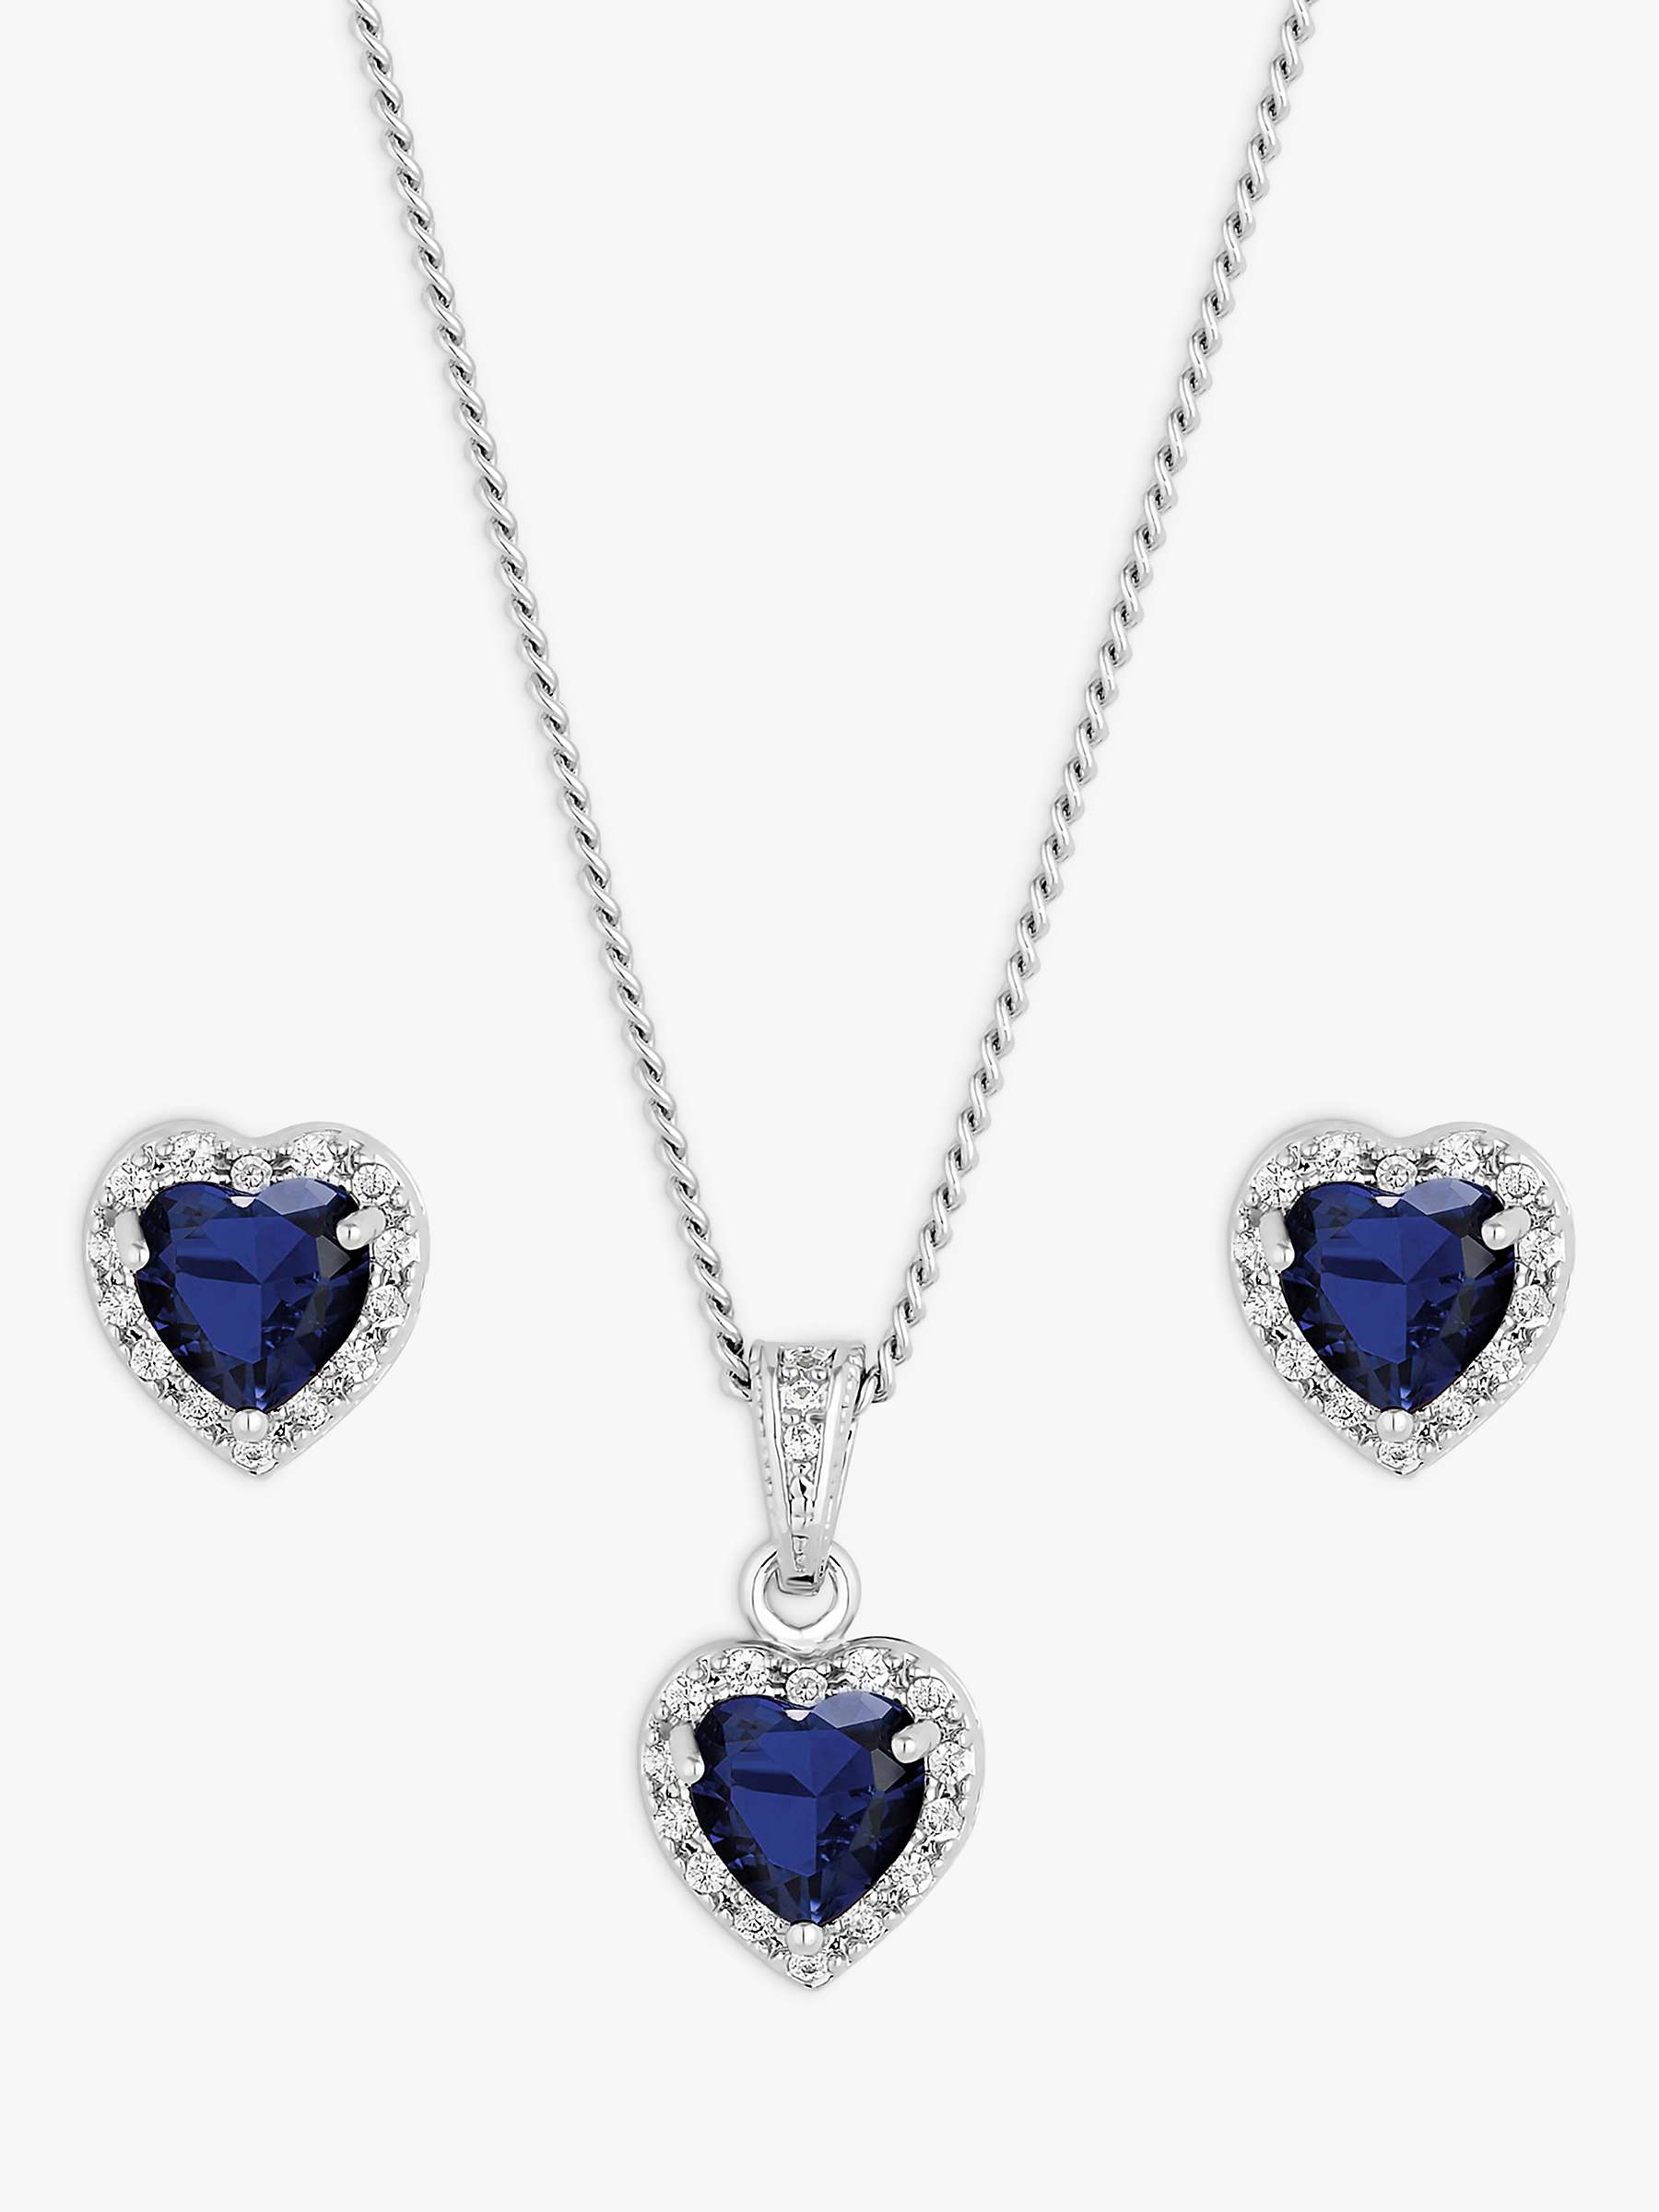 Buy Jon Richard Cubic Zirconia Heart Pendant Necklace and Stud Earrings Jewellery Set Online at johnlewis.com